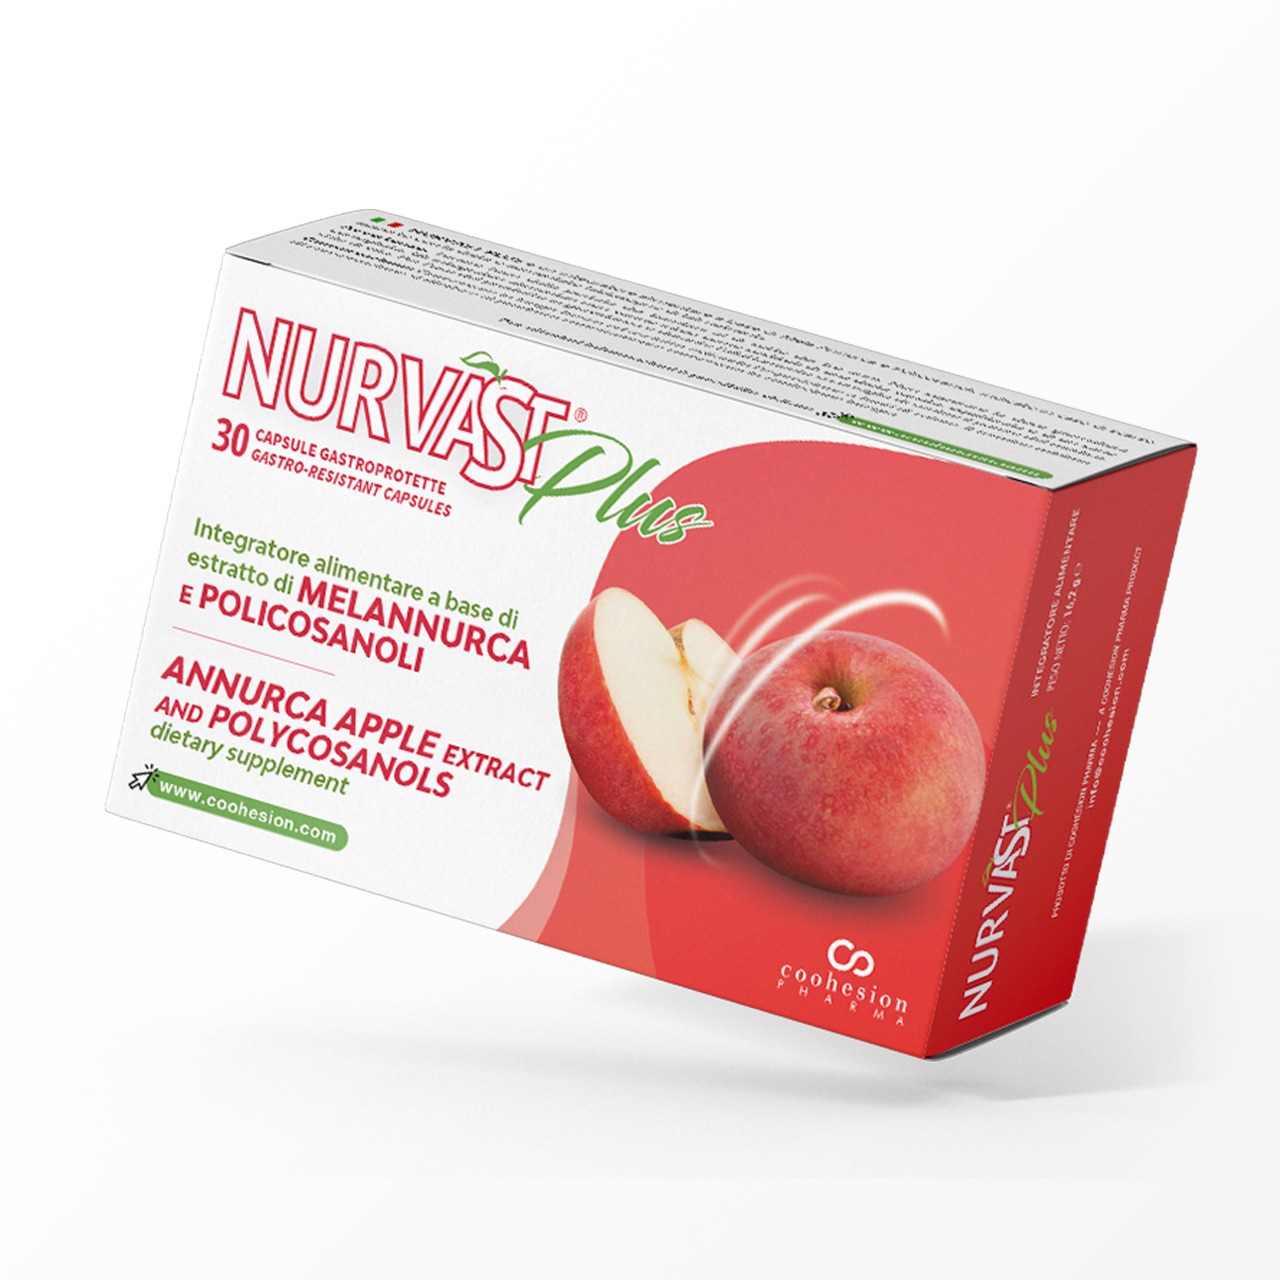 Nurvast Plus - Annurca apple extract and Polycosanols based dietary supplement